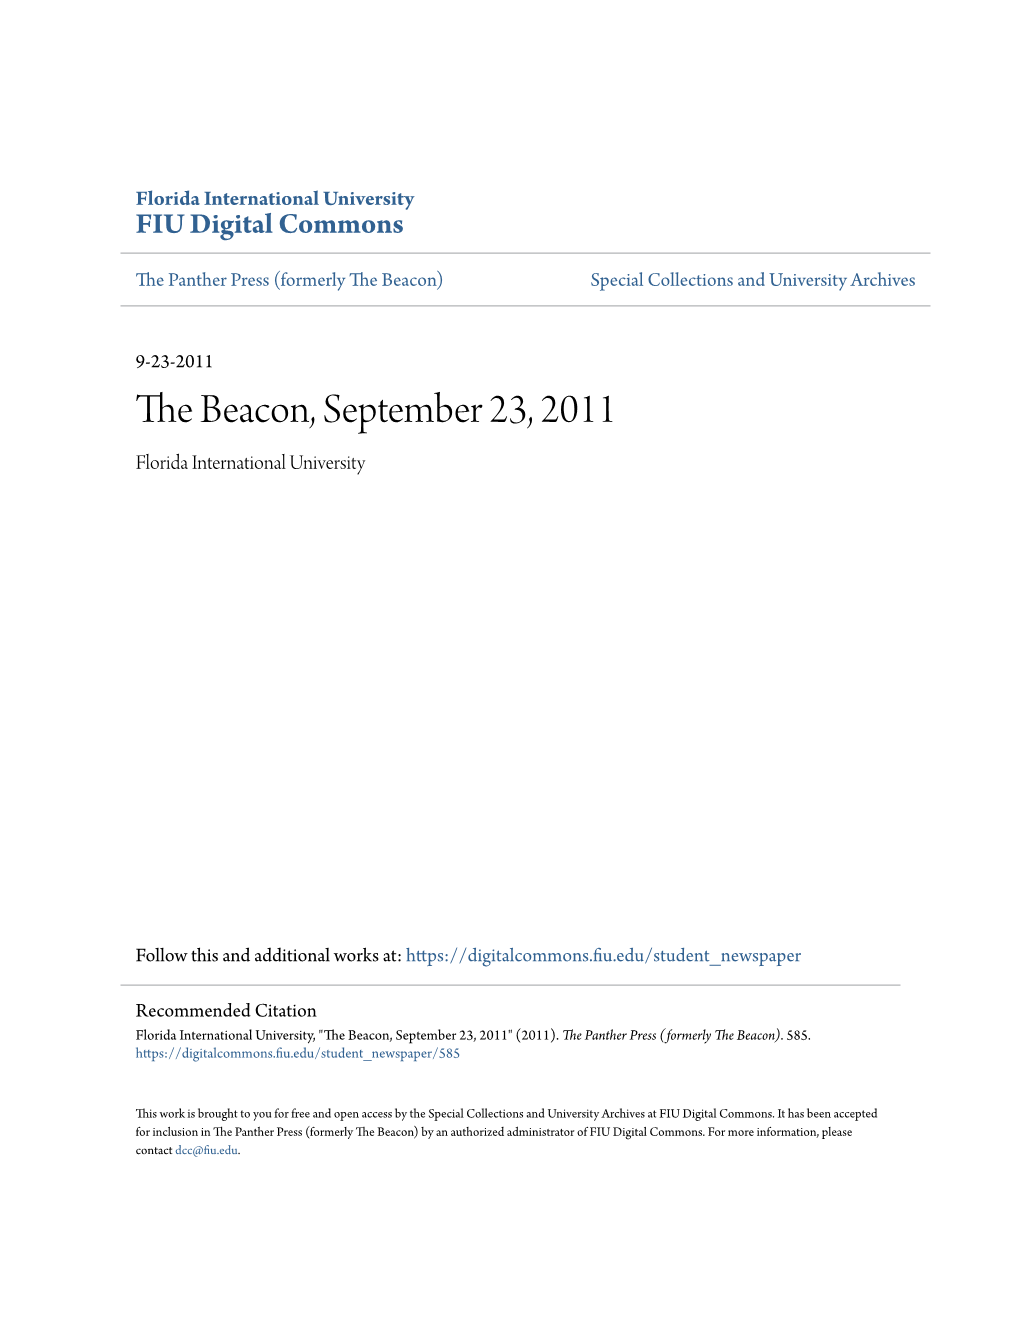 The Beacon, September 23, 2011 Florida International University